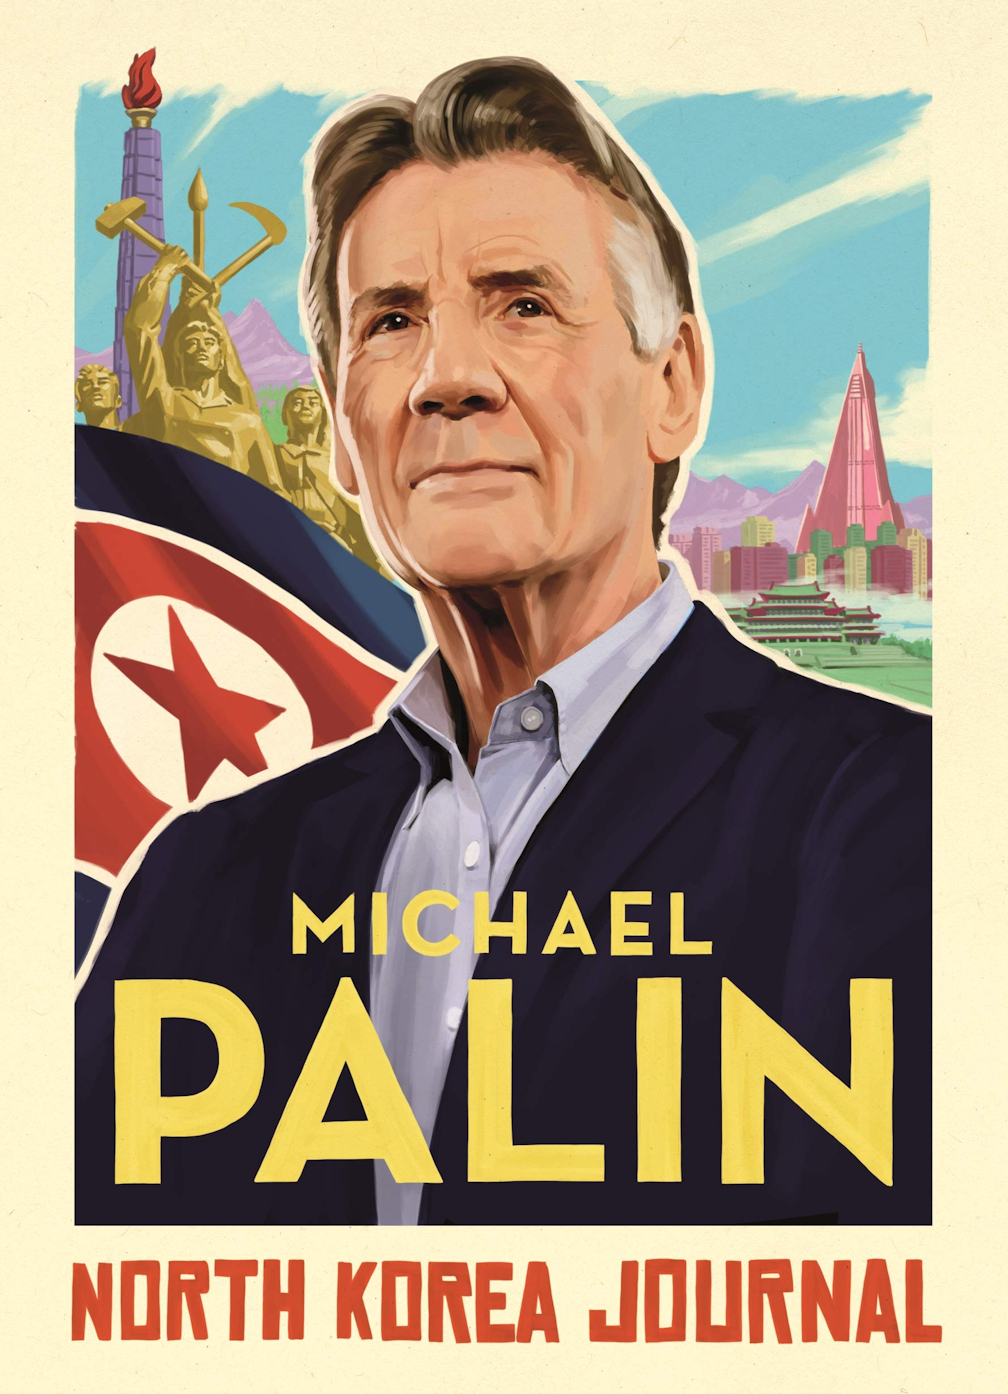 Michael Palin: From Monty Python to Pyongyang